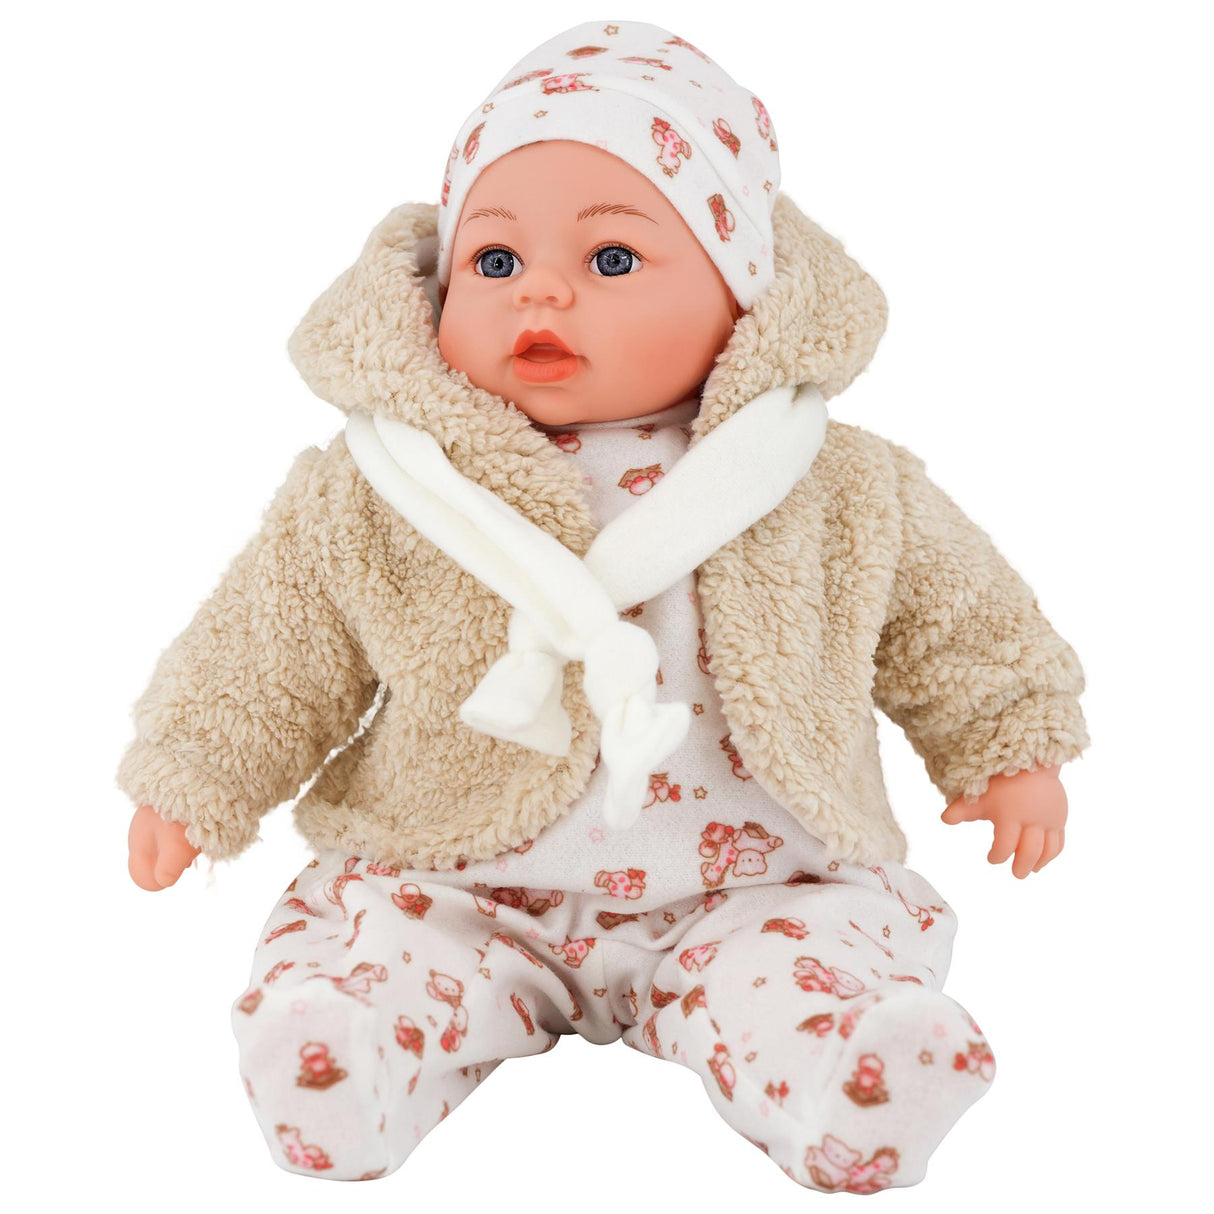 18" Bibi Girl Doll In Beige Coat by BiBi Doll - UKBuyZone